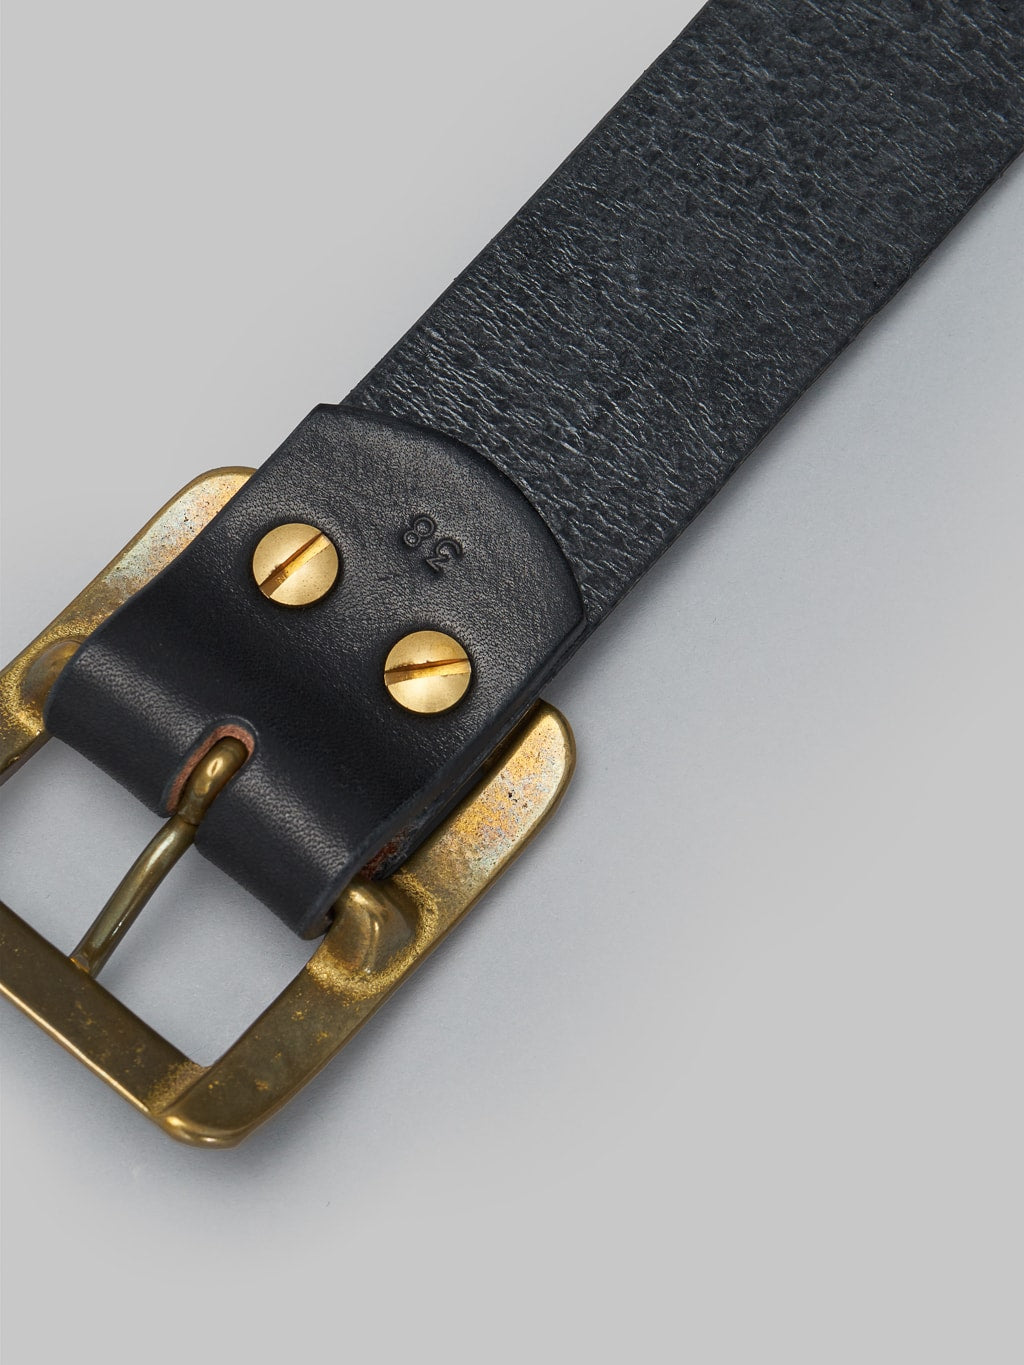 The Strike Gold Leather Belt Black